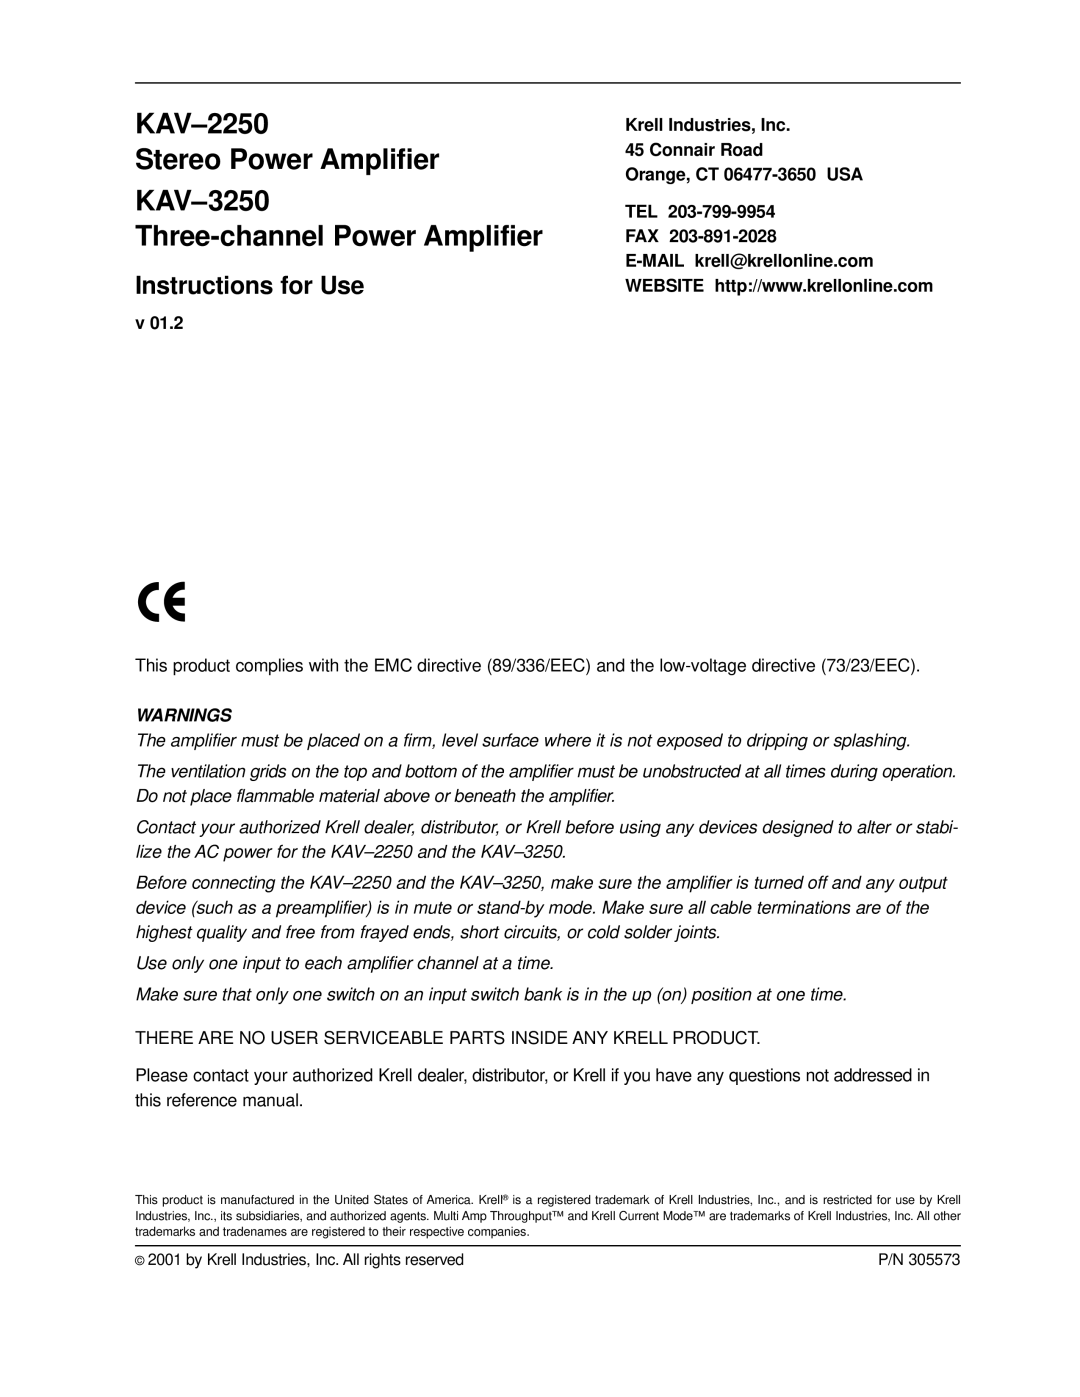 Krell Industries KAV2250 Instructions for Use, KAV-2250 Stereo Power Amplifier, KAV-3250, Three-channel Power Amplifier 